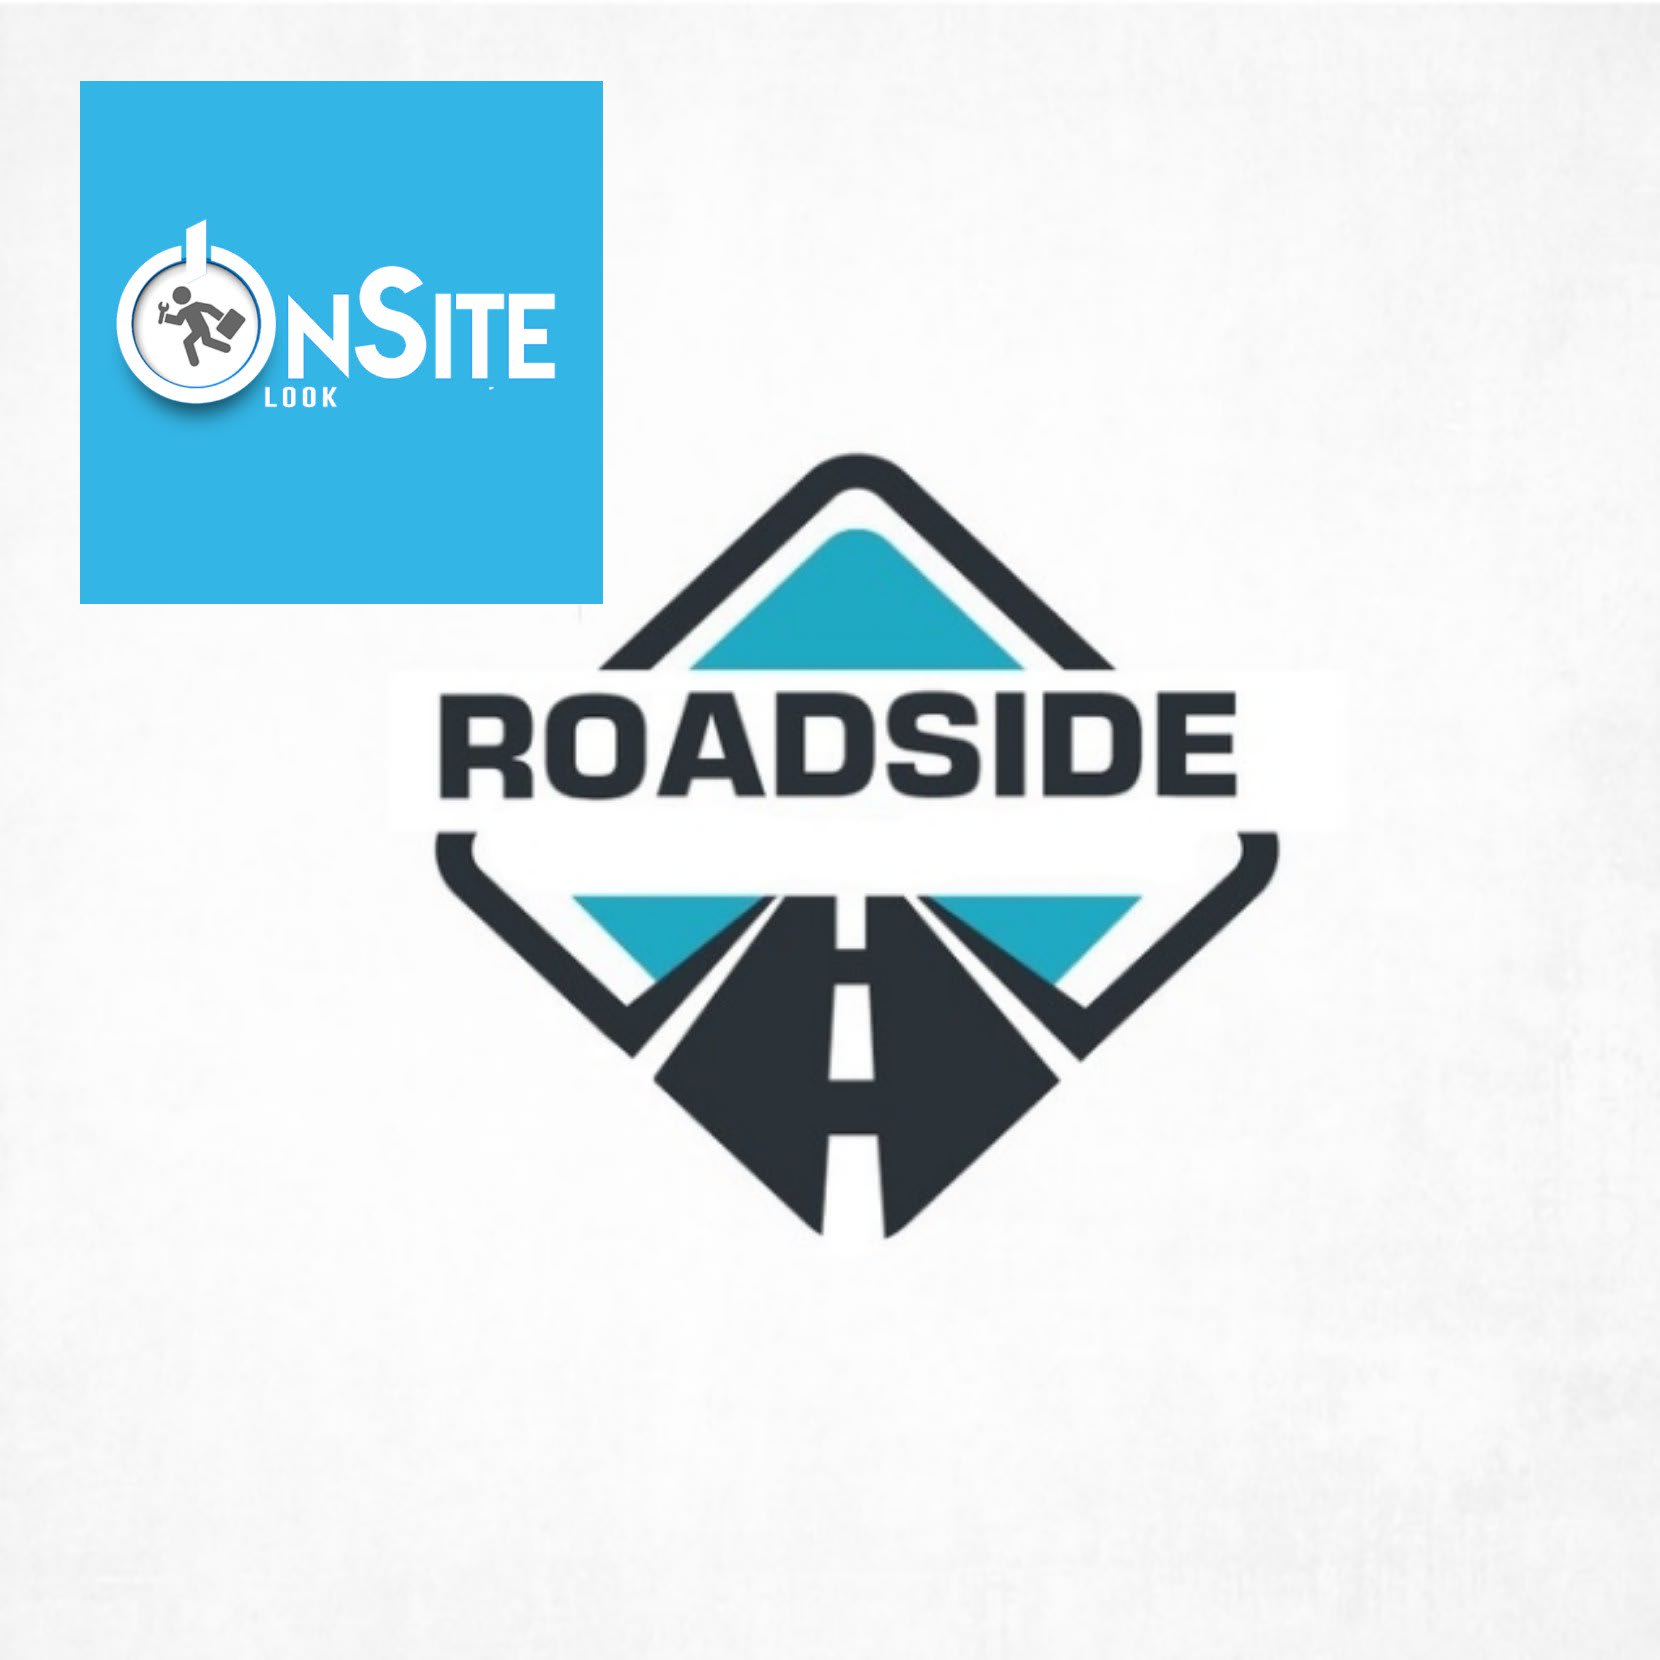 Onsite Roadside Service